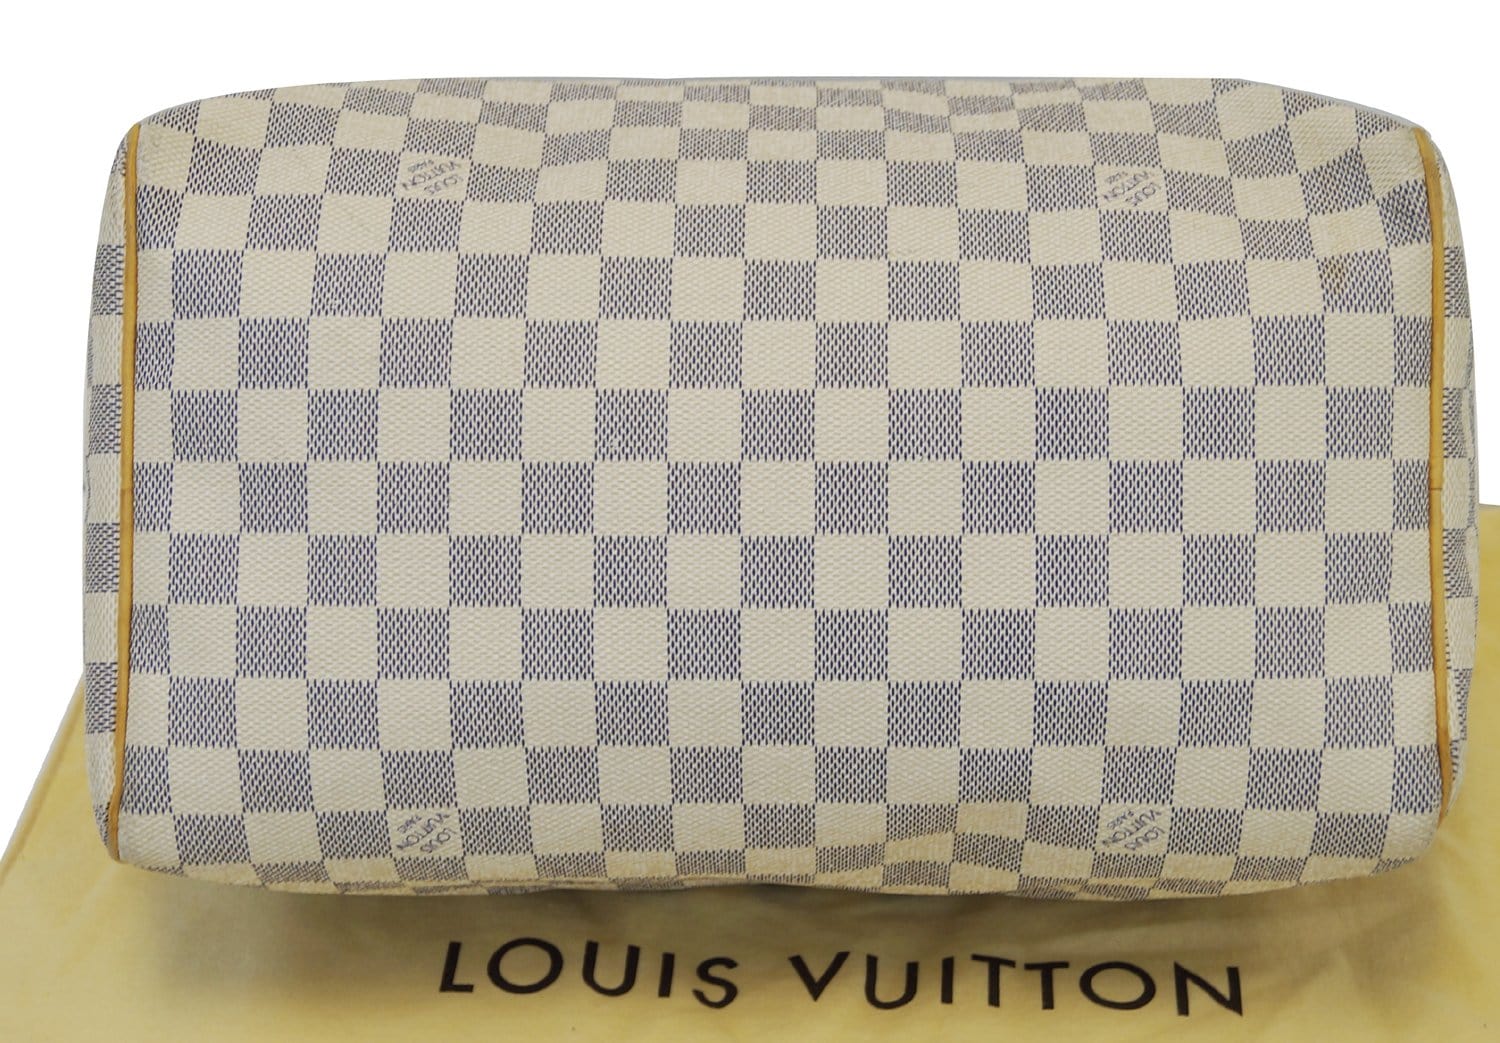 LOUIS VUITTON Speedy 30 Damier Azur White Bag